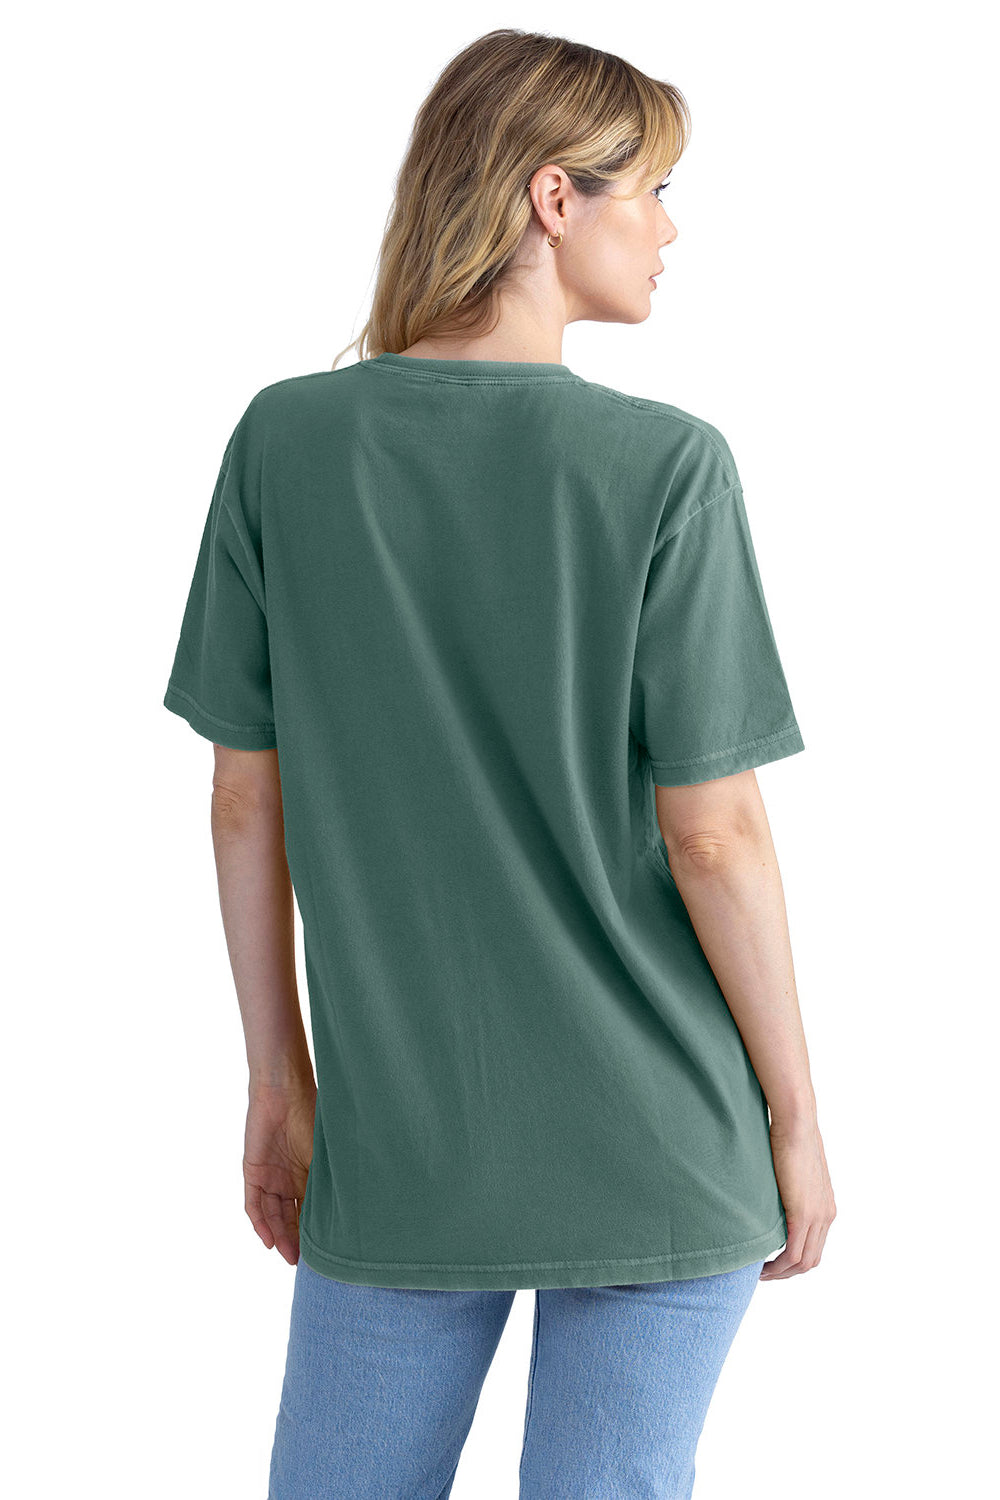 Next Level 3600SW Mens Soft Wash Short Sleeve Crewneck T-Shirt Royal Pine Green Back